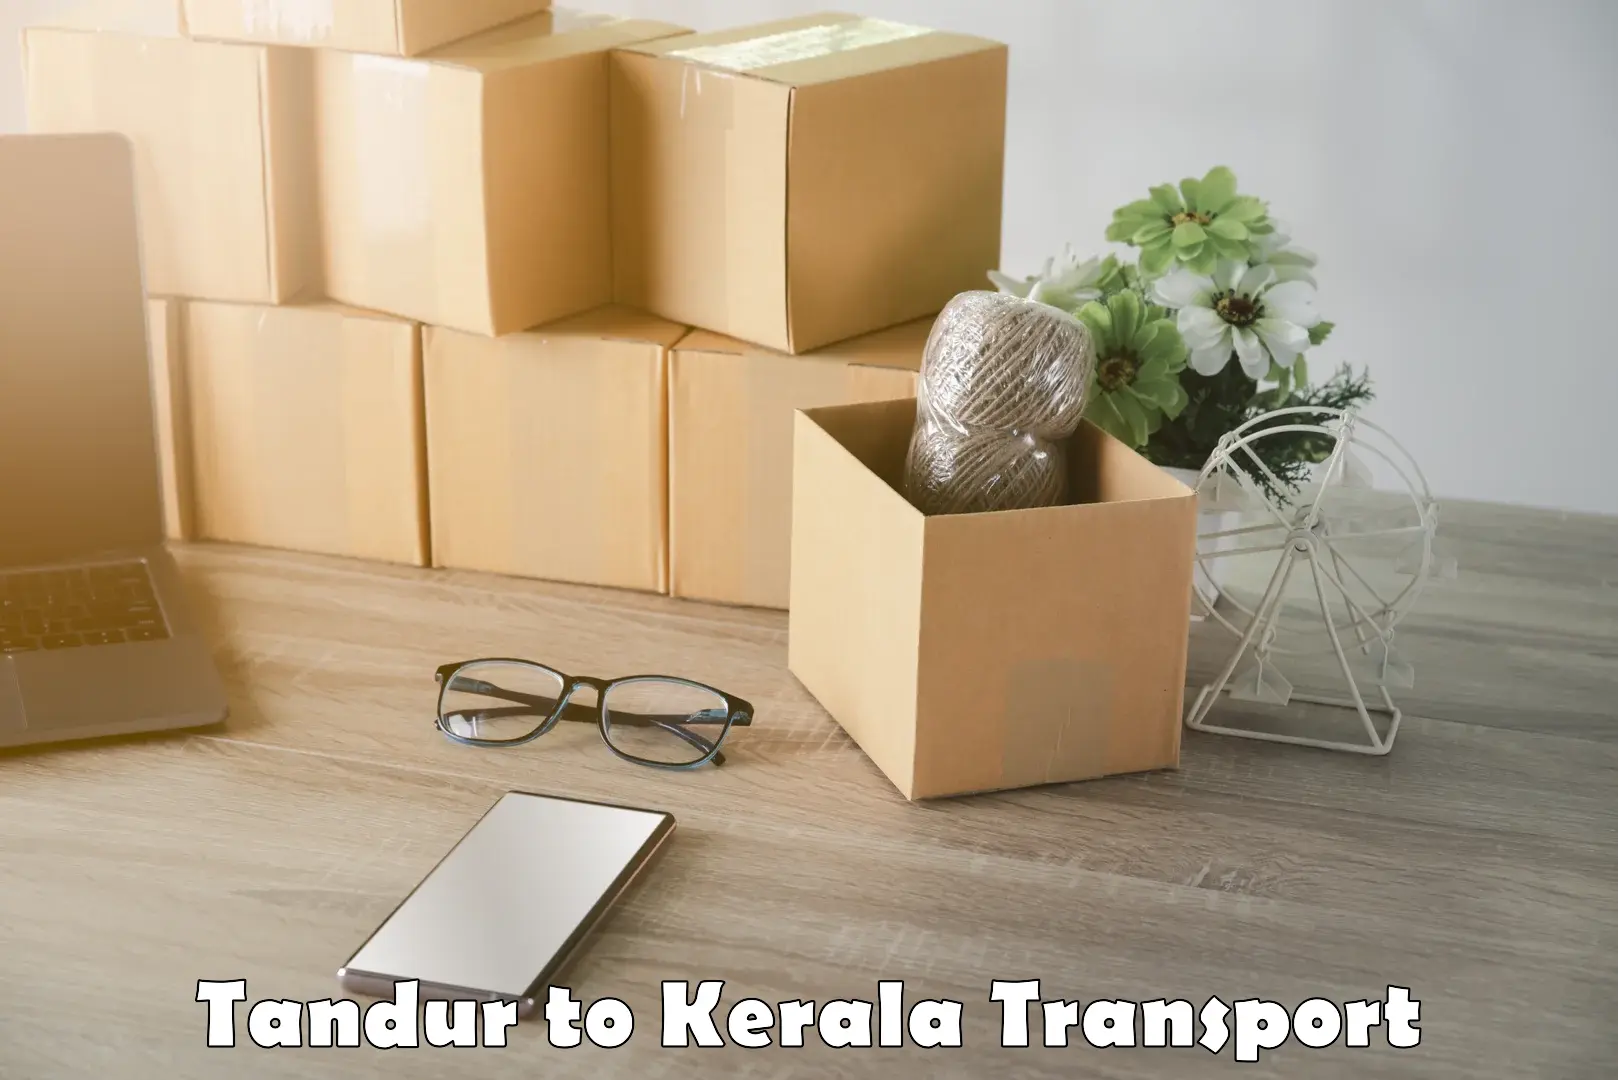 Nearby transport service Tandur to Kerala